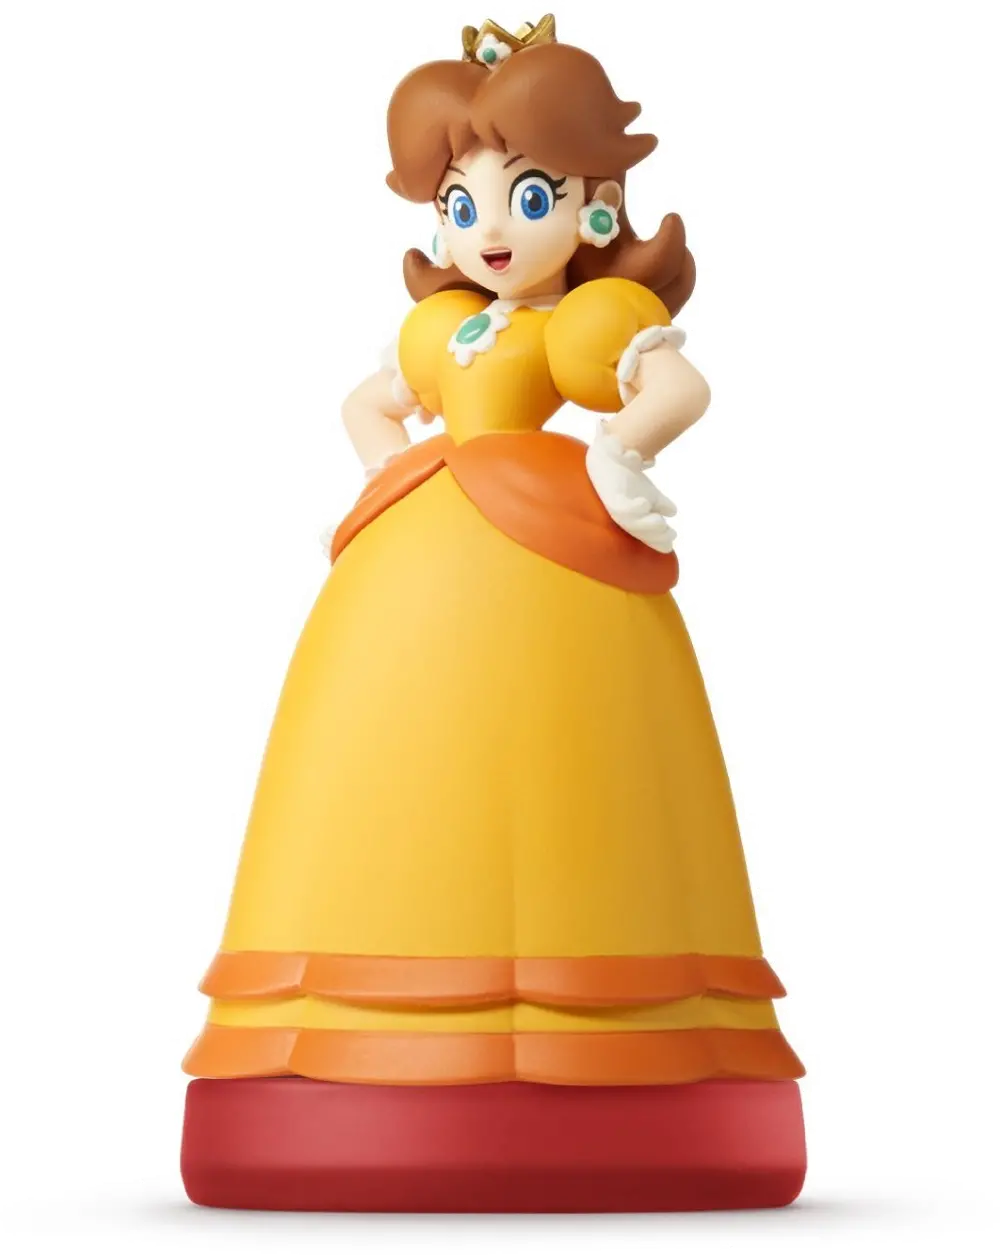 WIU NVL C ABAN Nintendo Daisy amiibo - Super Mario Series-1